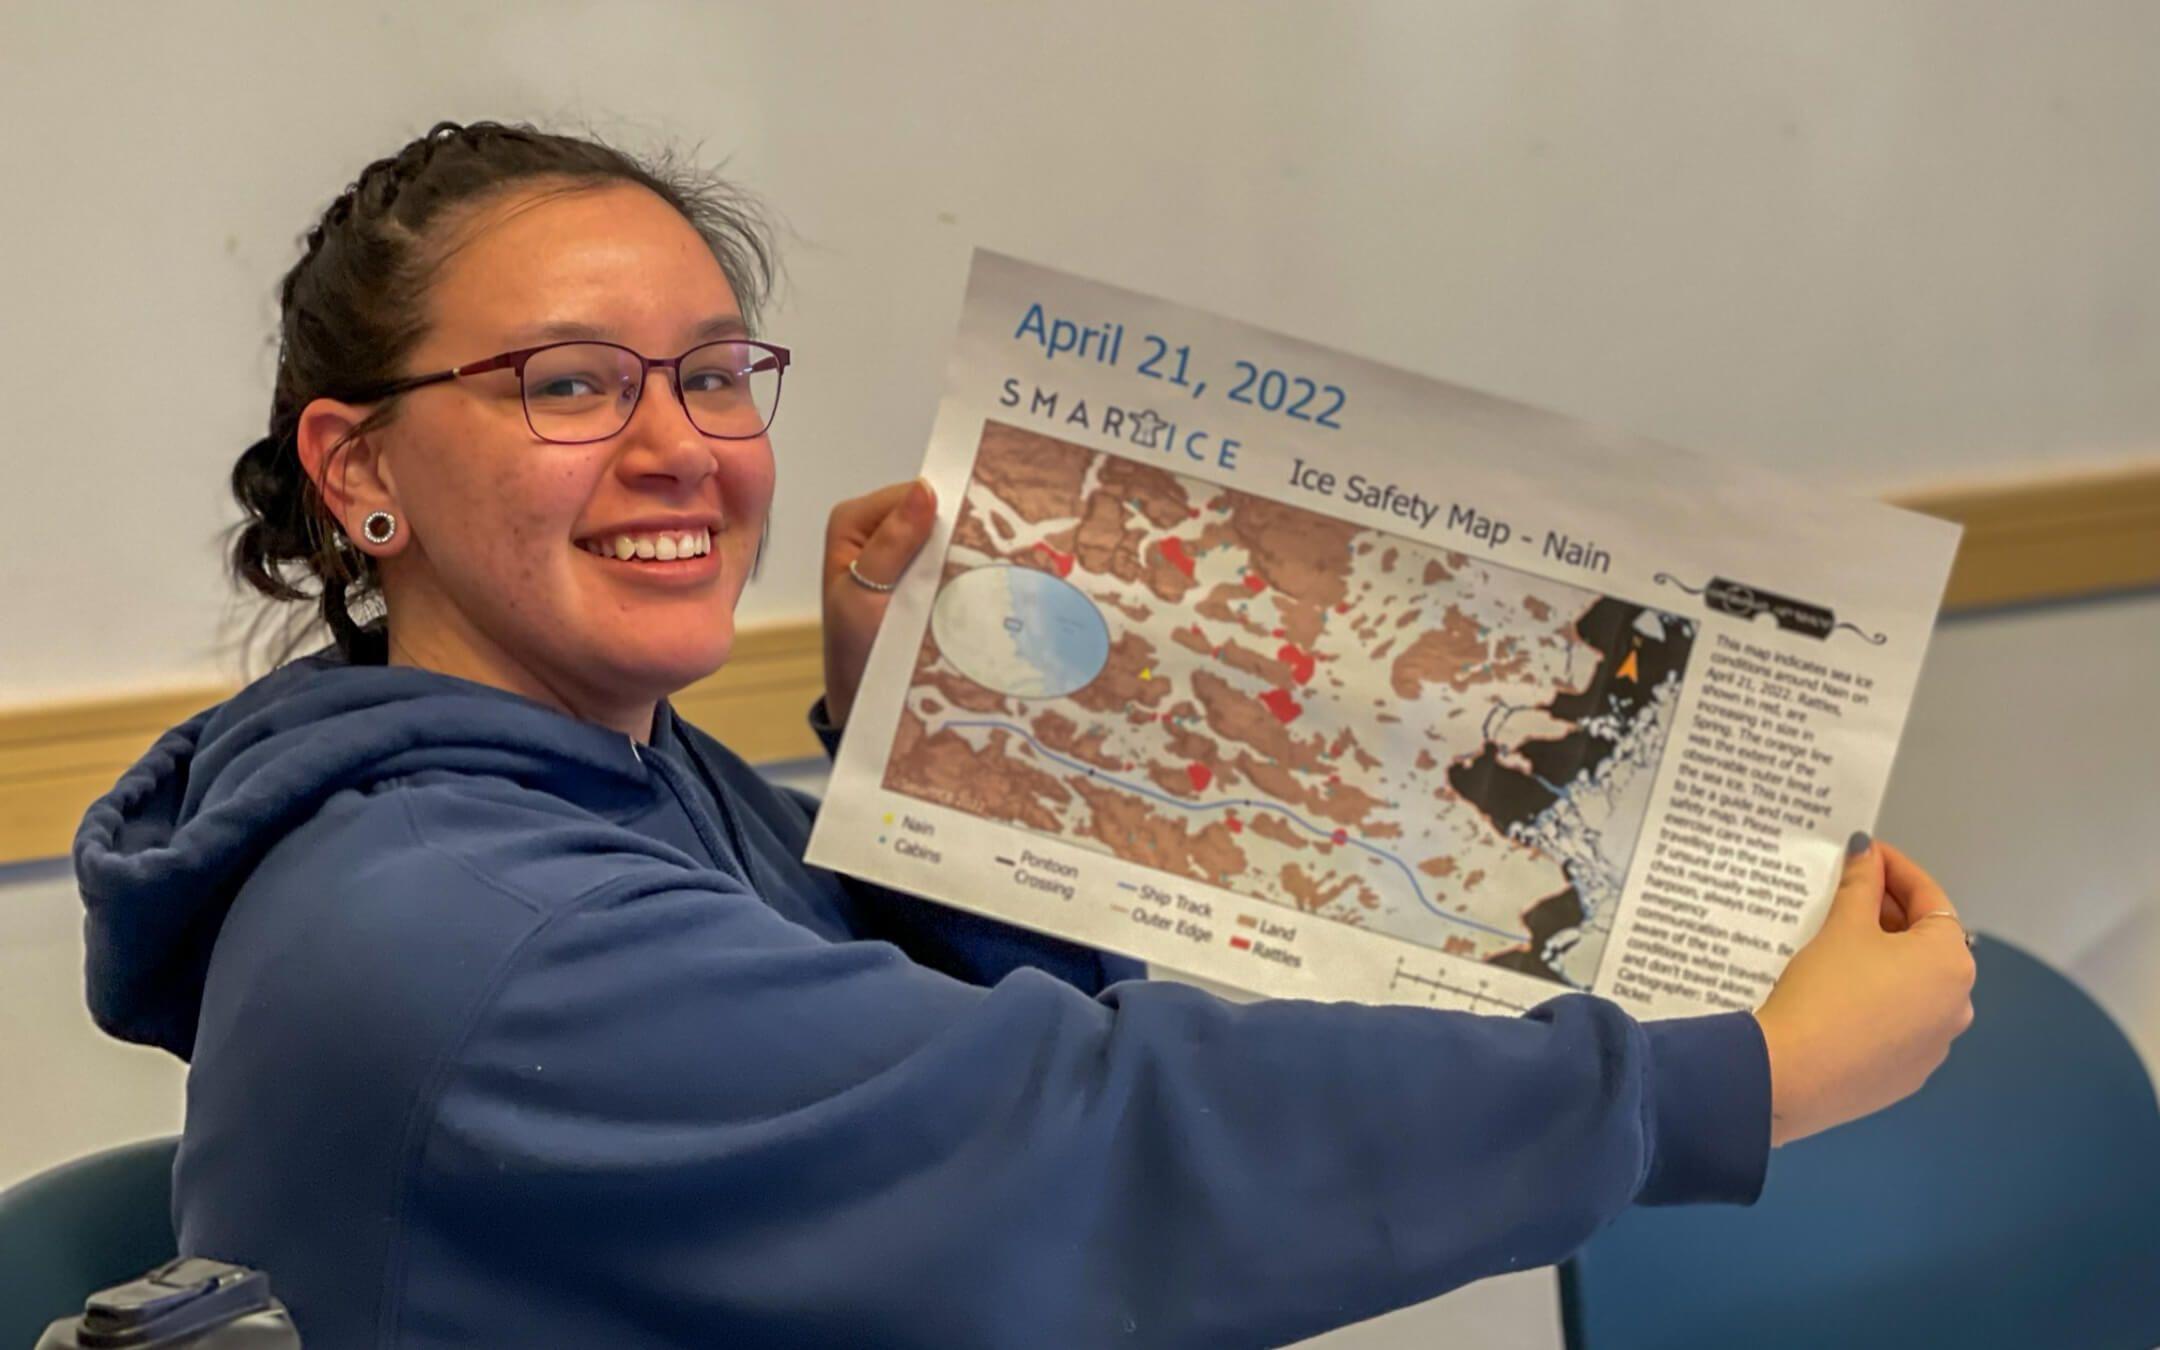 Shawna Dicker and one of the ice safety maps she created of her home community (Nain, Nunatsiavut) as a graduate of the Sikumik Qaujimajjuti Program.
Photo: SmartICE